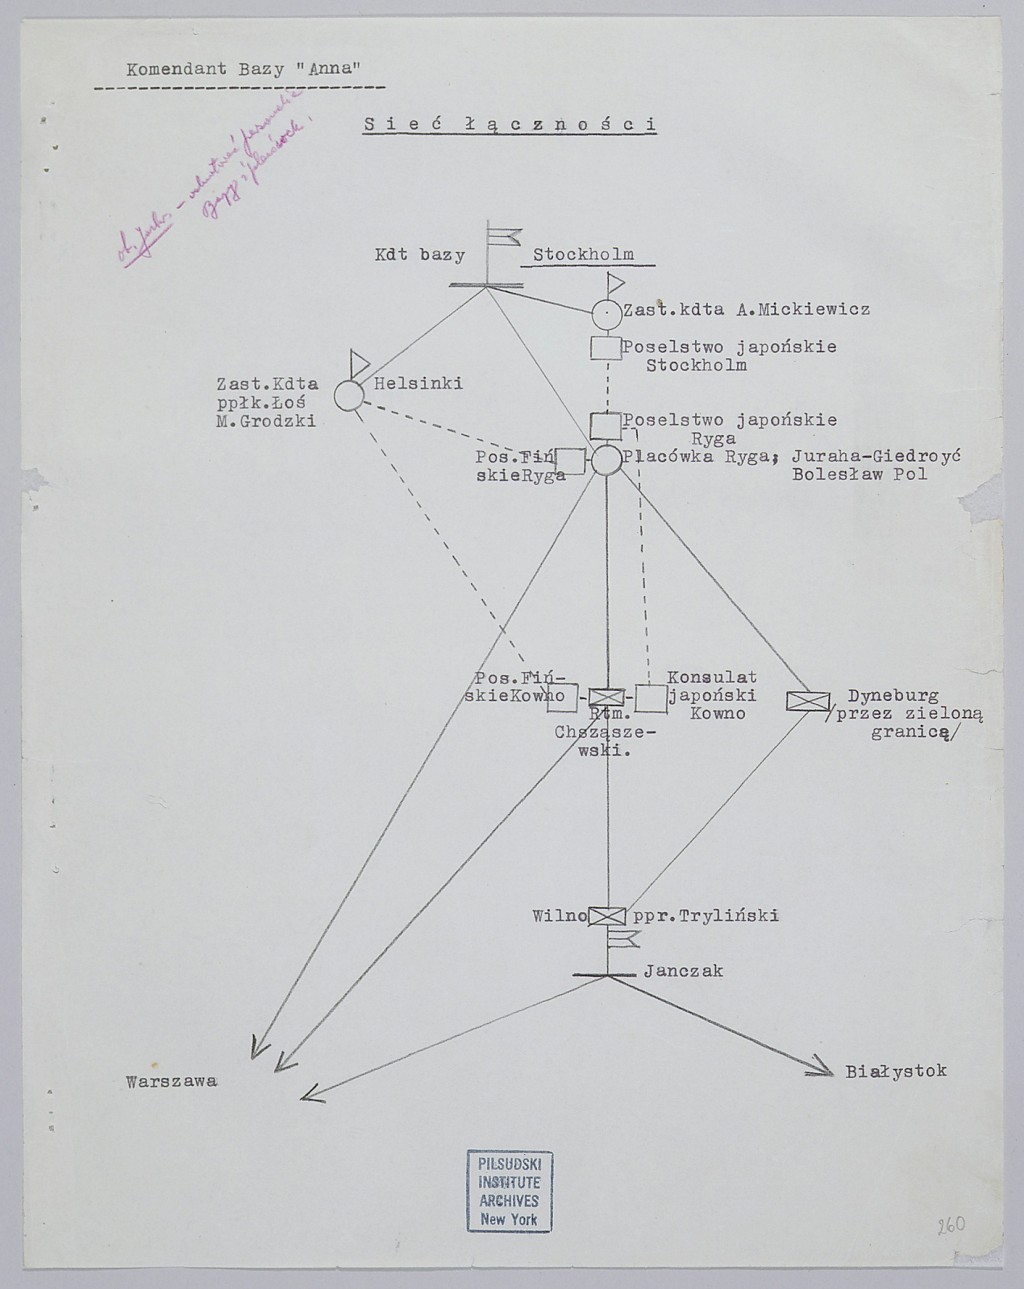 "Web of Communications" chart, July 1940 [LCID: 2002xiiy]